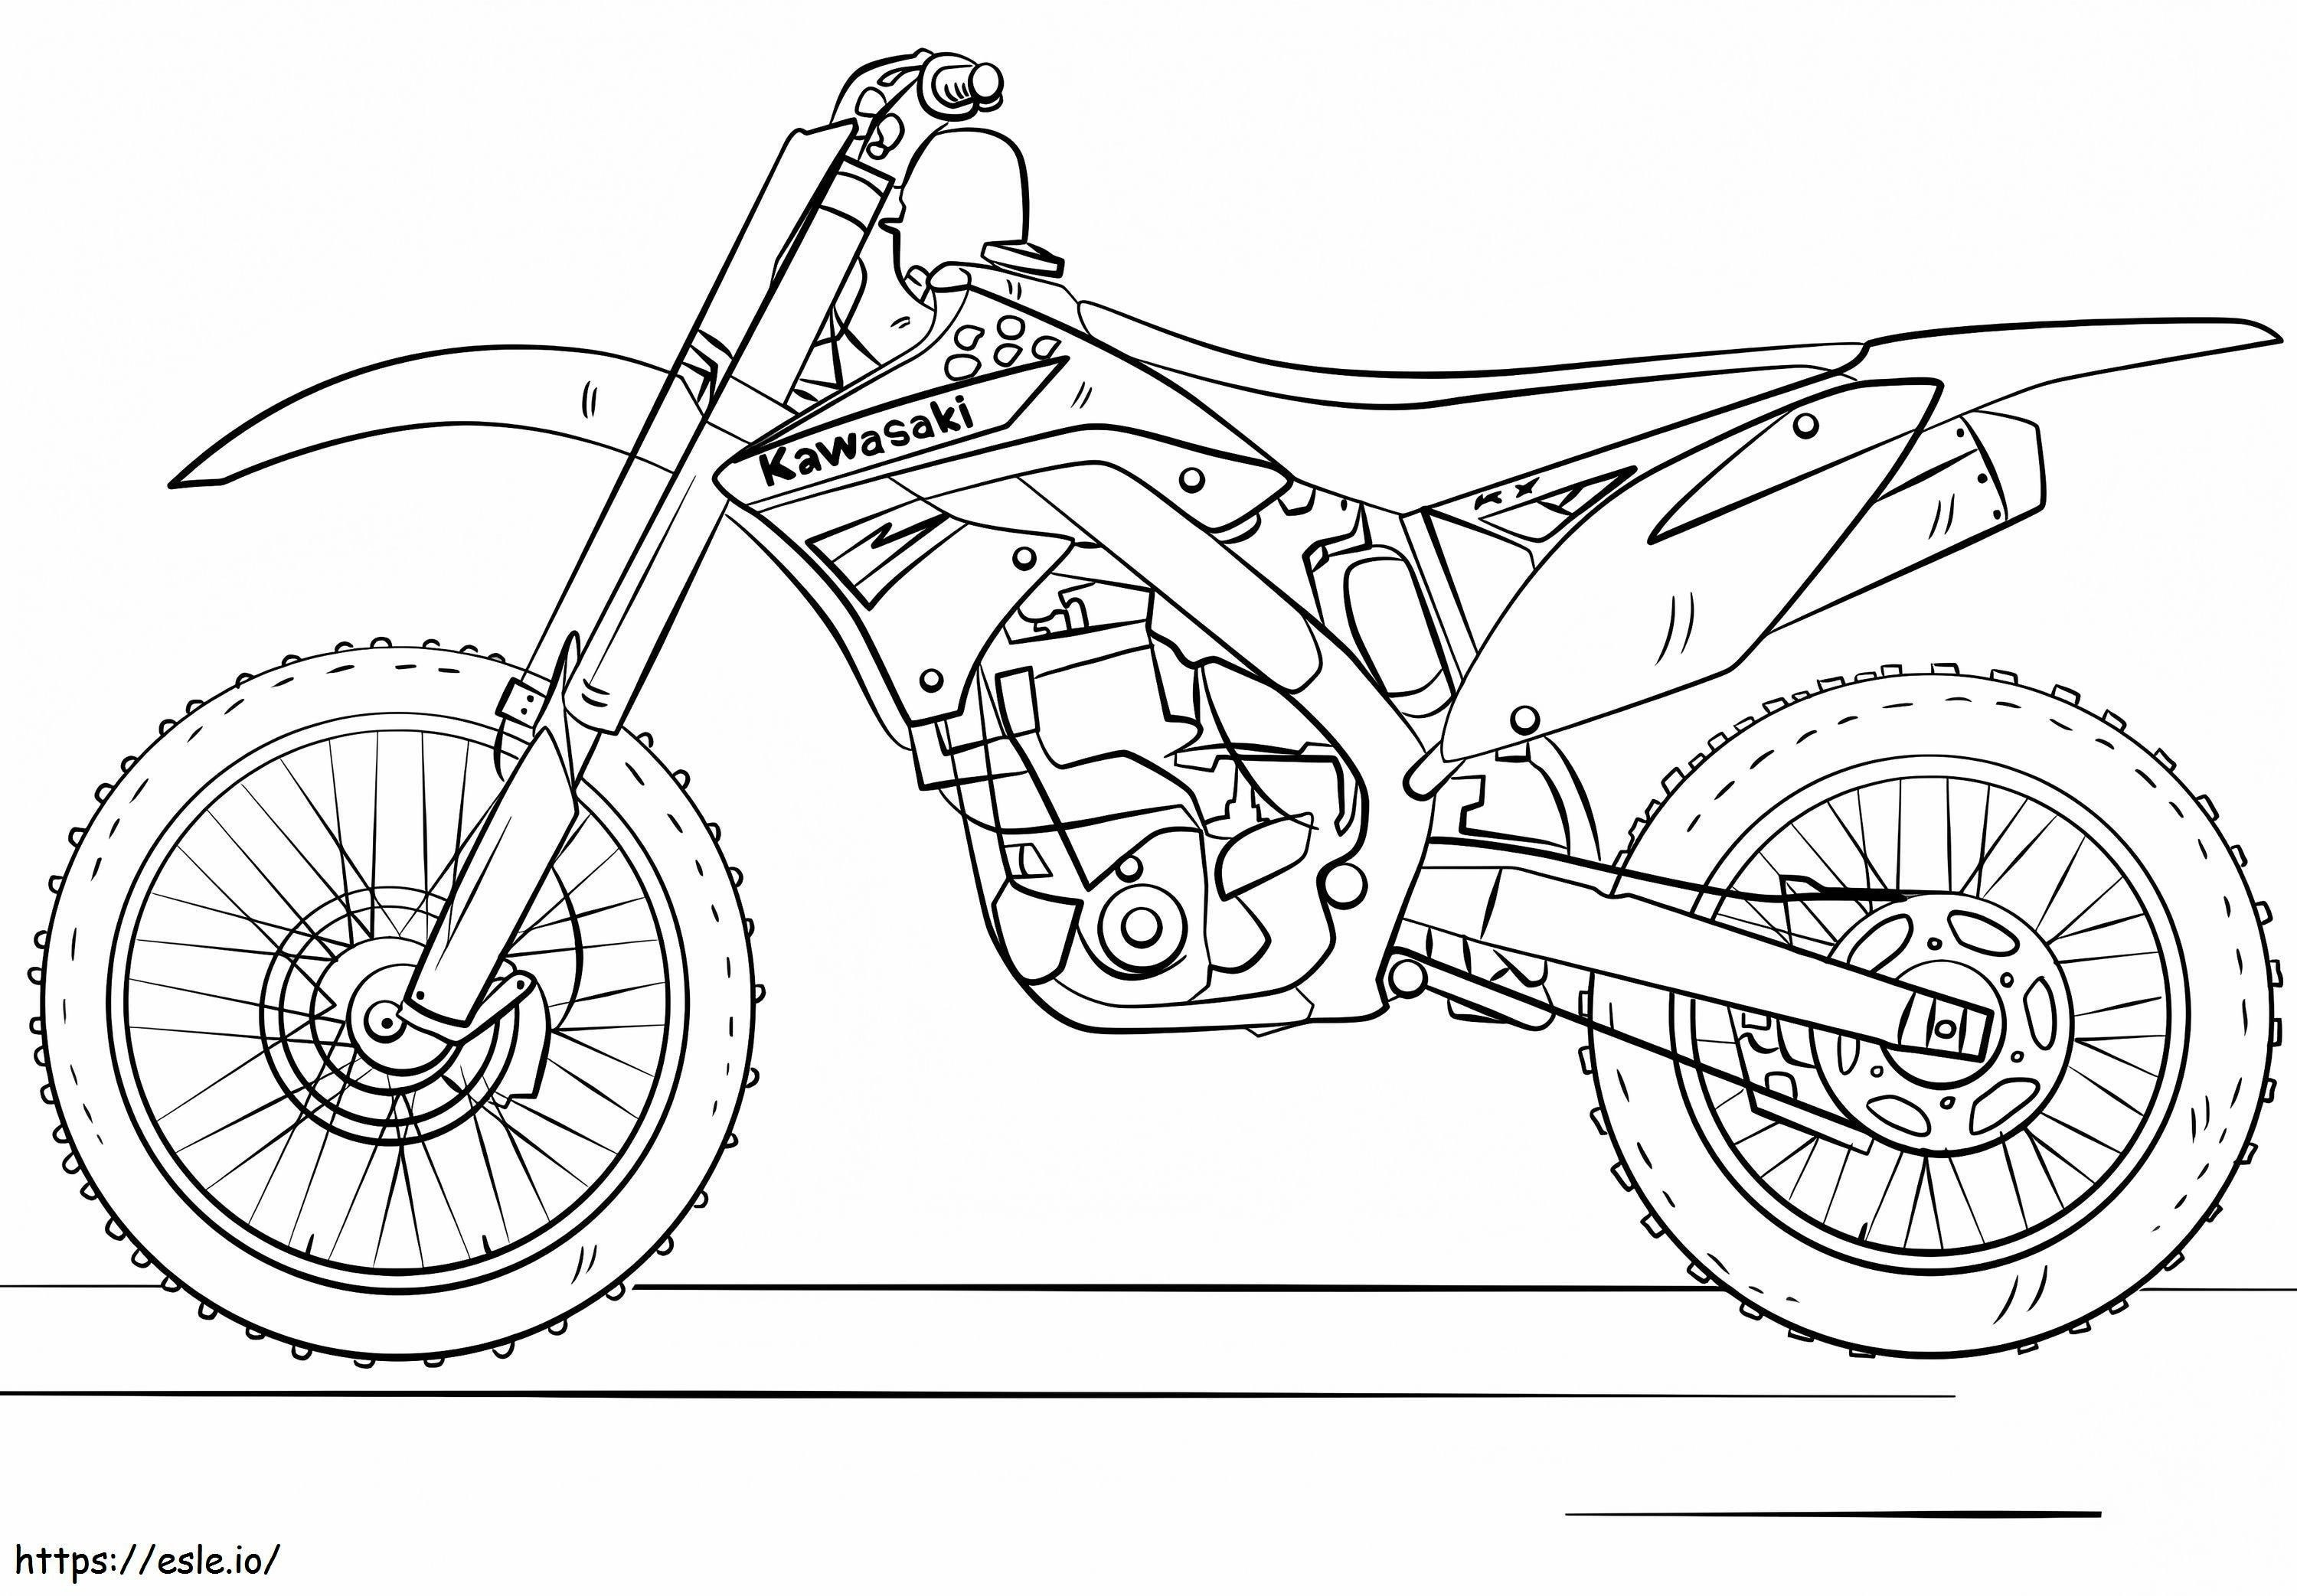 Kawasaki Motokros Bisikleti boyama